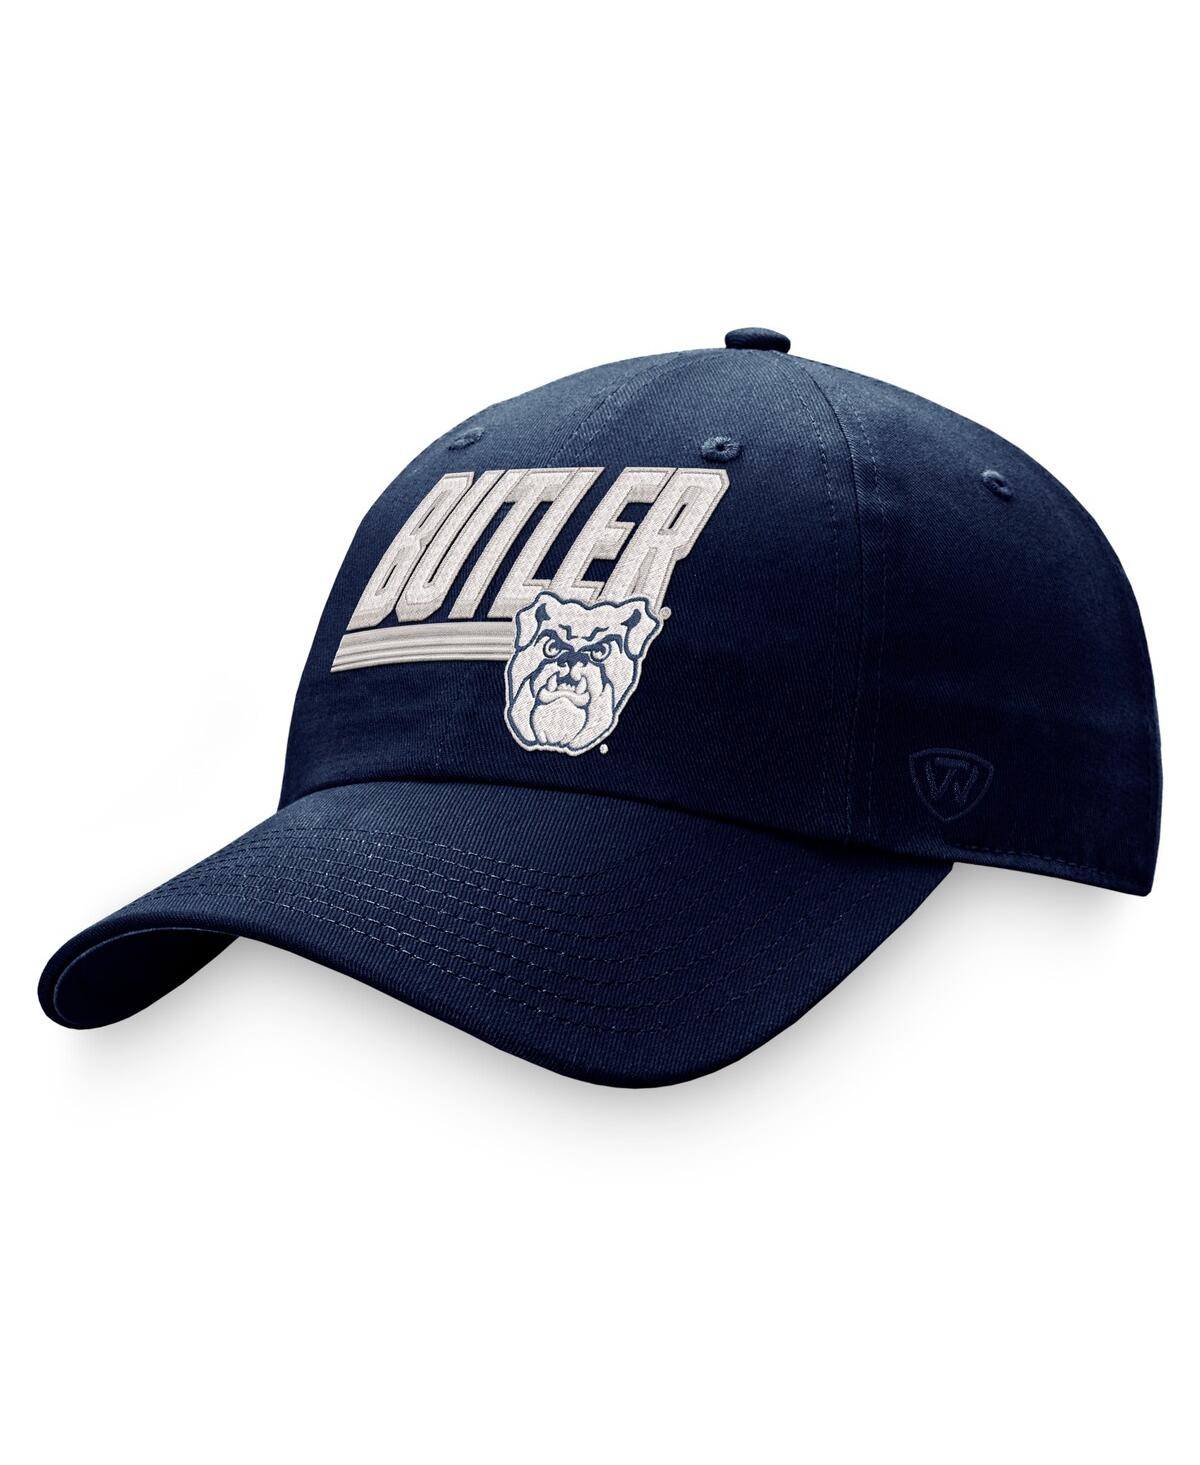 Shop Top Of The World Men's  Navy Butler Bulldogs Slice Adjustable Hat